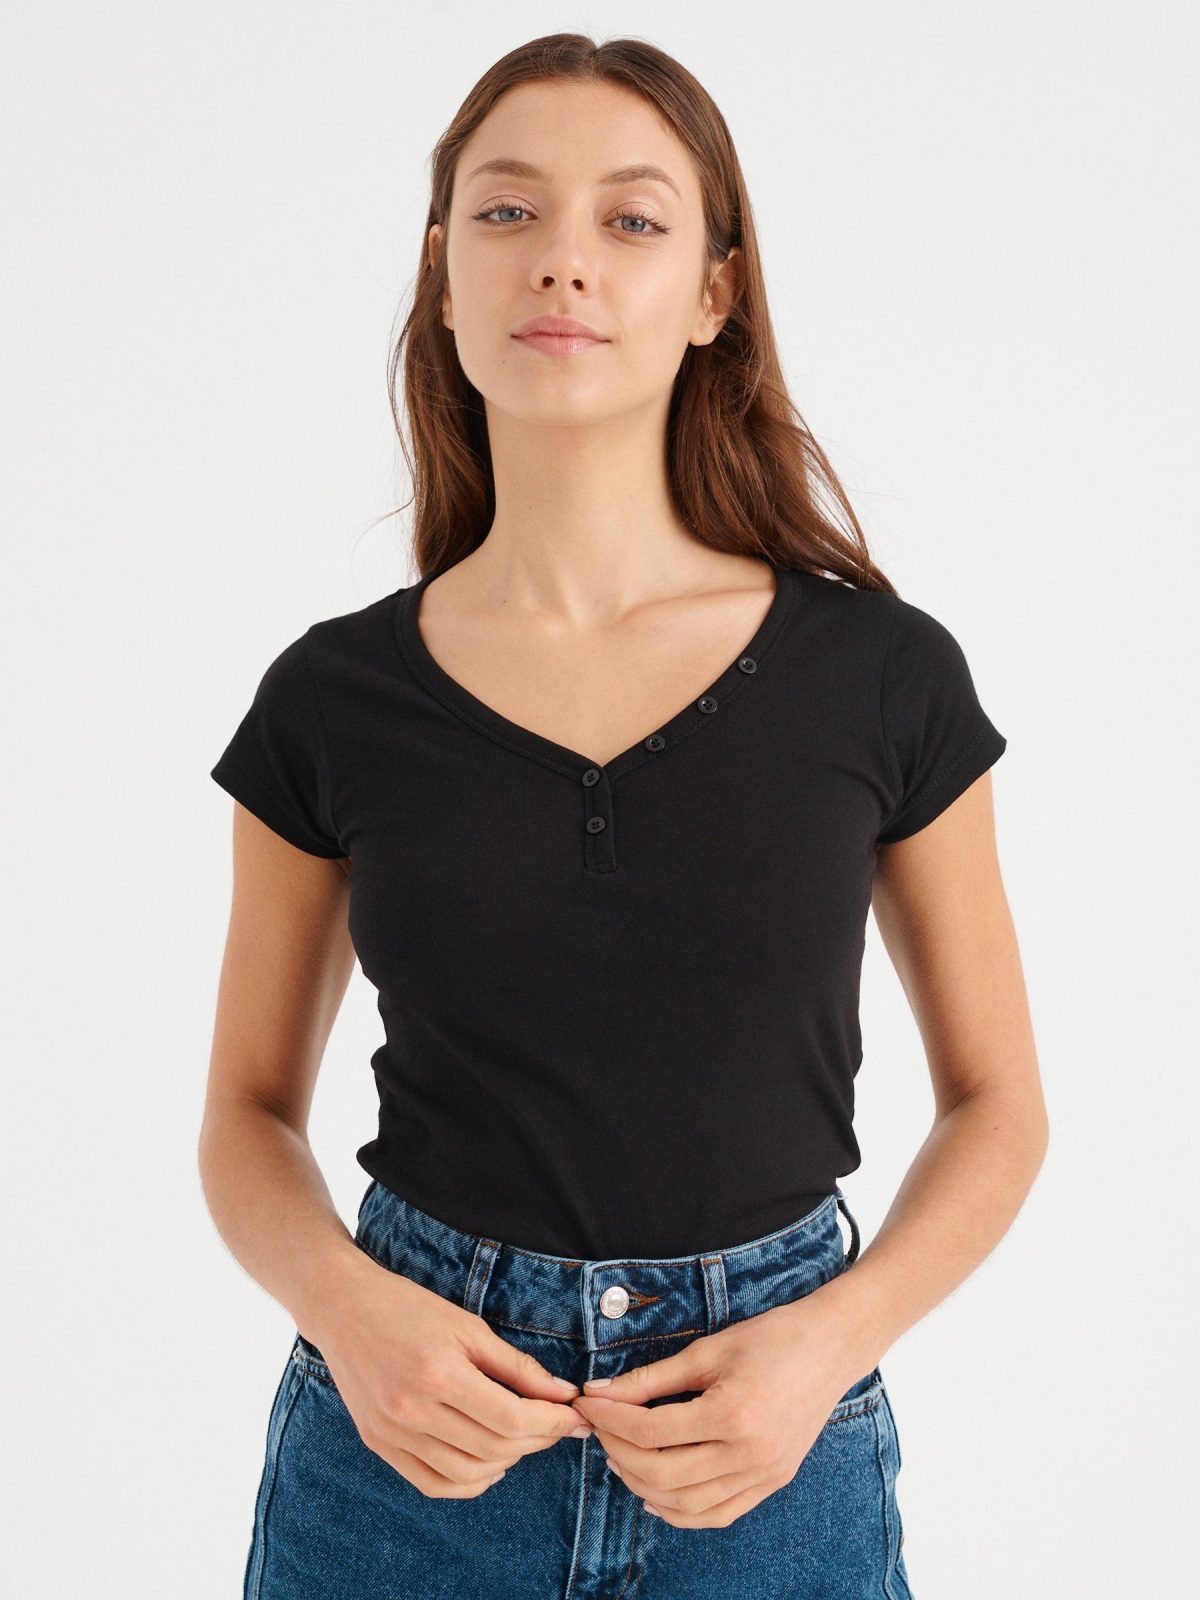 Basic V-neck T-shirt black middle front view